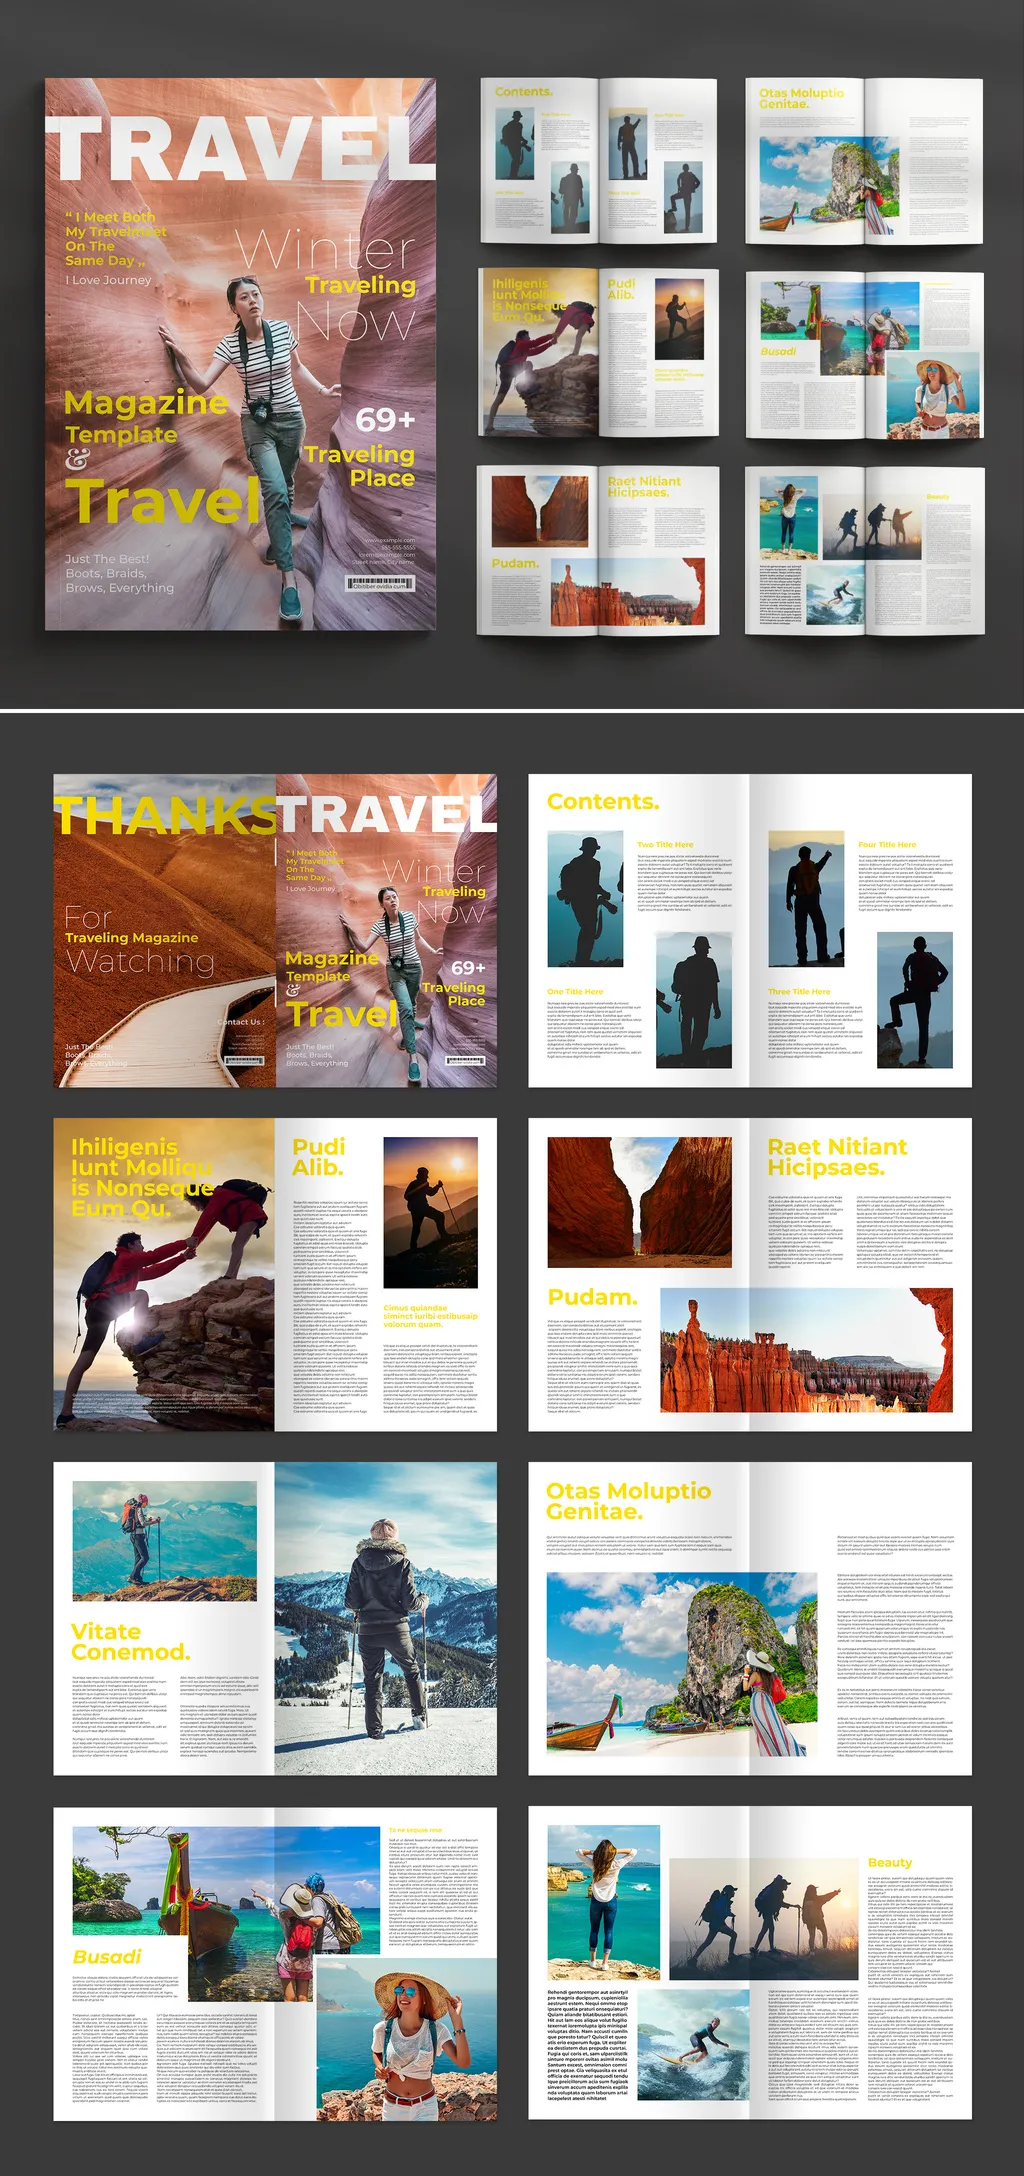 Adobestock - Travel Magazine Template 723727005